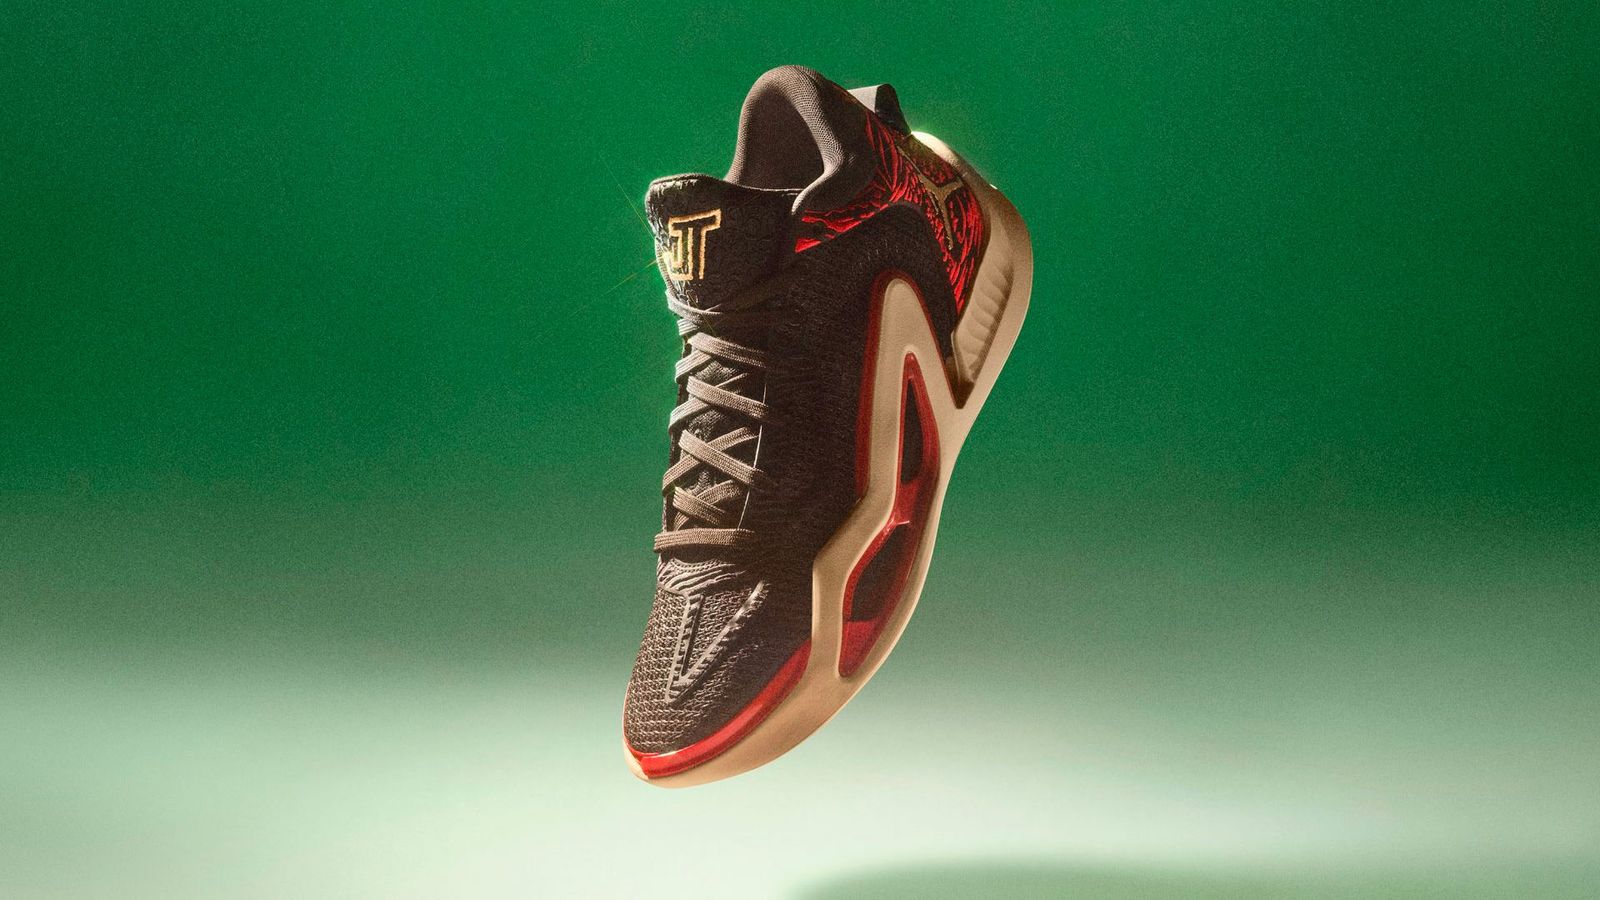 Jayson Tatum's Jordan Tatum 1 "Zoo" product image of a black sneaker with a red animal print pattern around the heel.